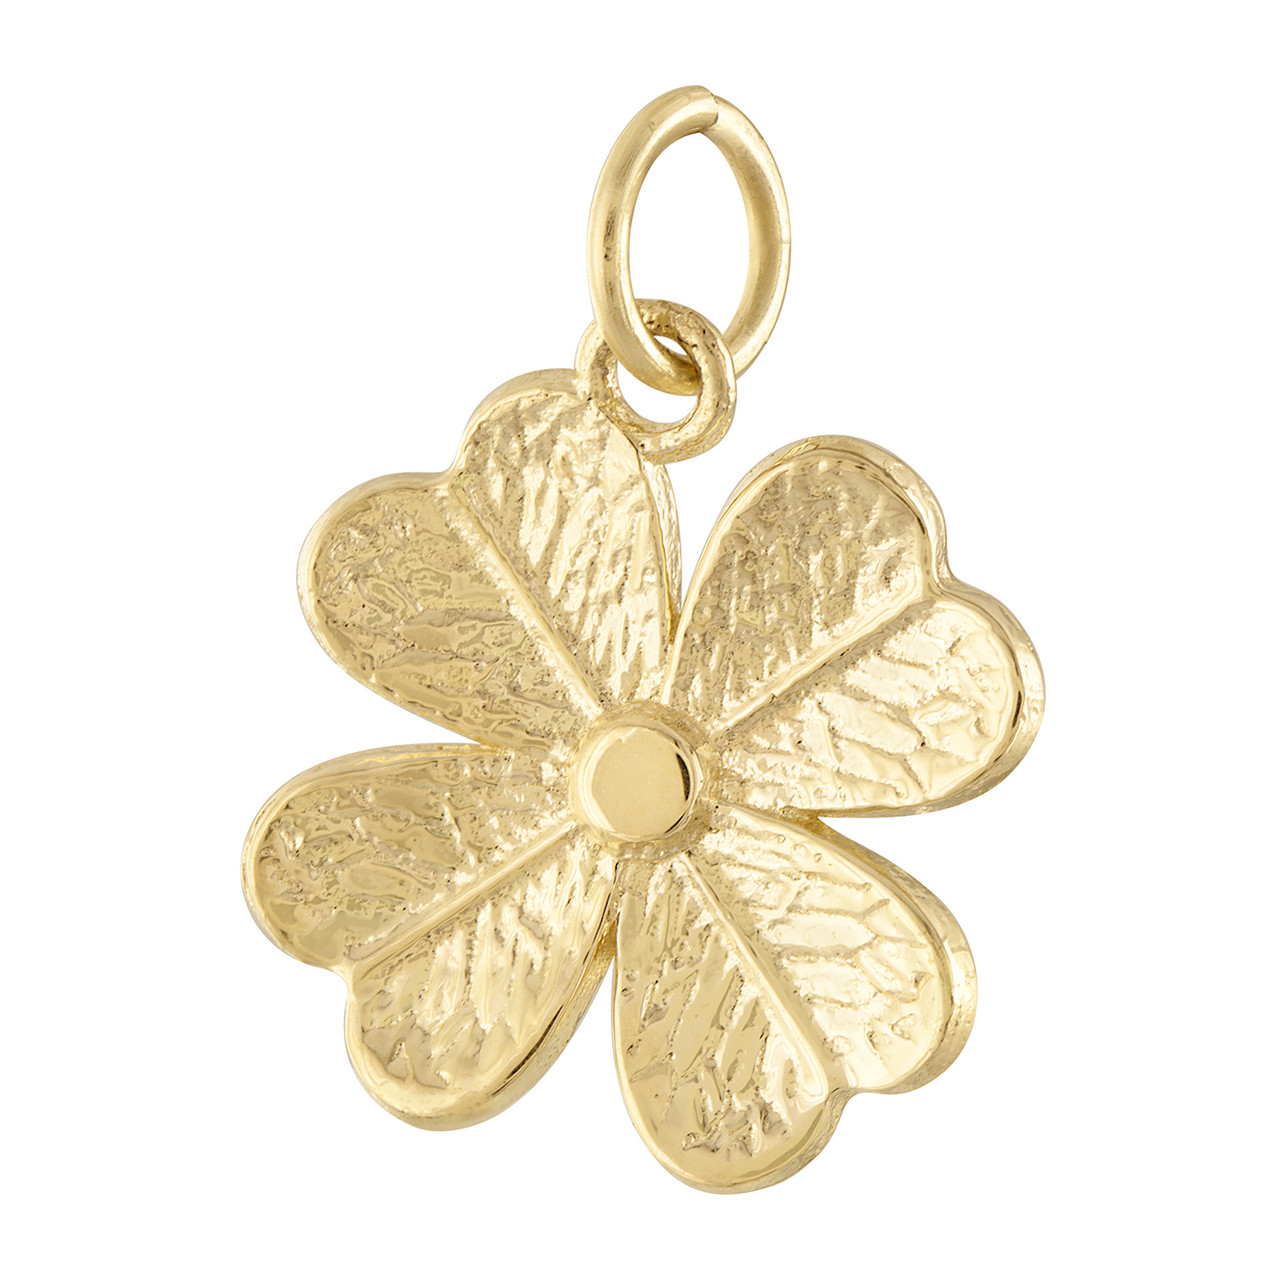 Four Leaf Clover 3 Flower Necklace - Gold and Rose Gold Rose Gold